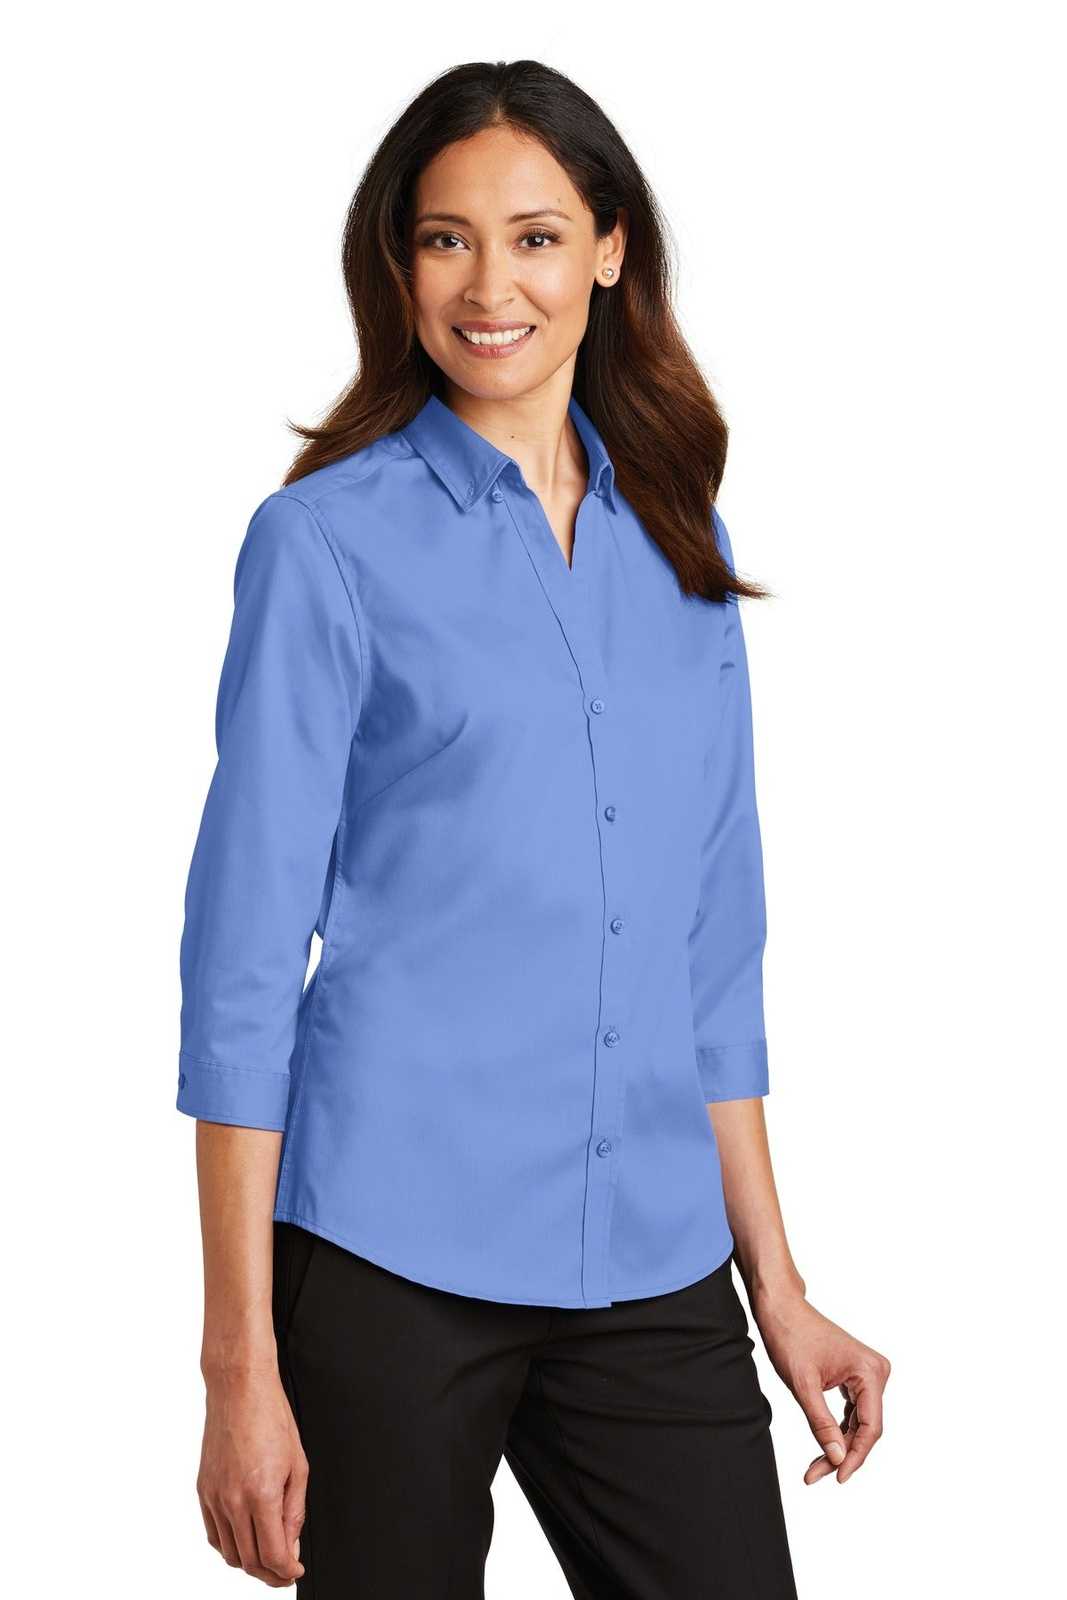 Port Authority L665 Ladies 3/4-Sleeve Superpro Twill Shirt - Ultramarine Blue - HIT a Double - 4